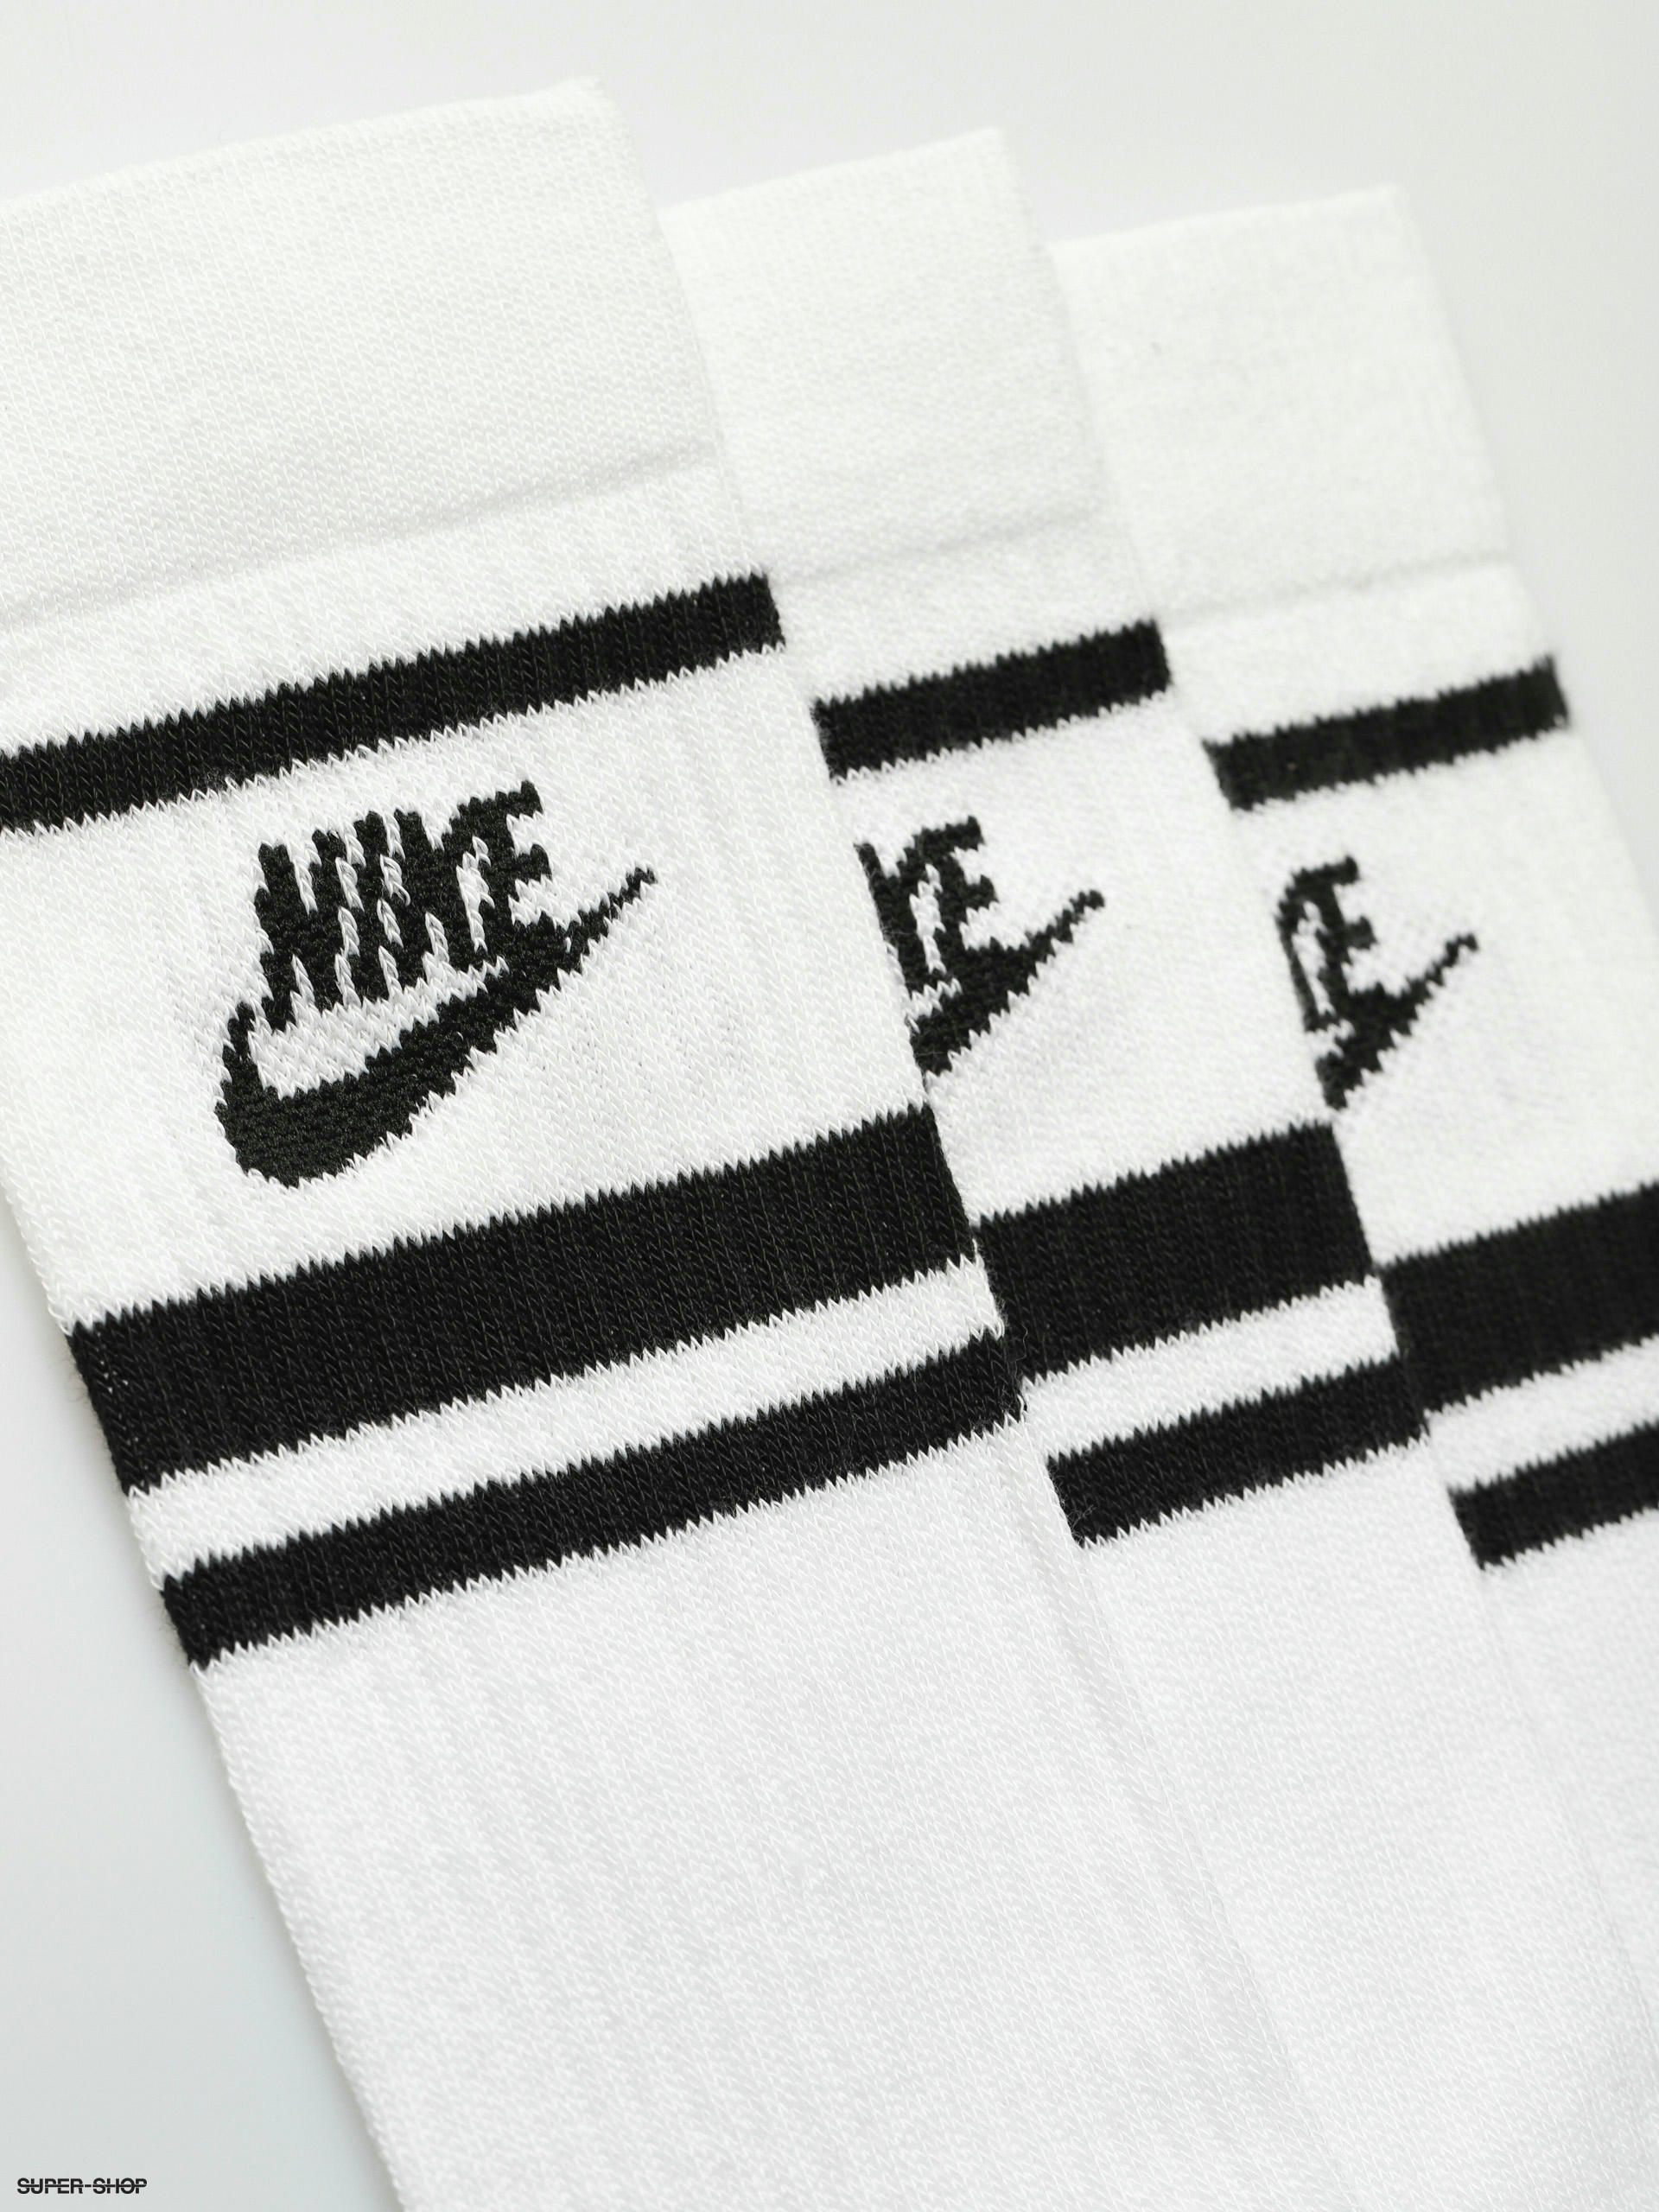 Meia Nike Sportswear Everyday Essential (3 Pares) White - So High